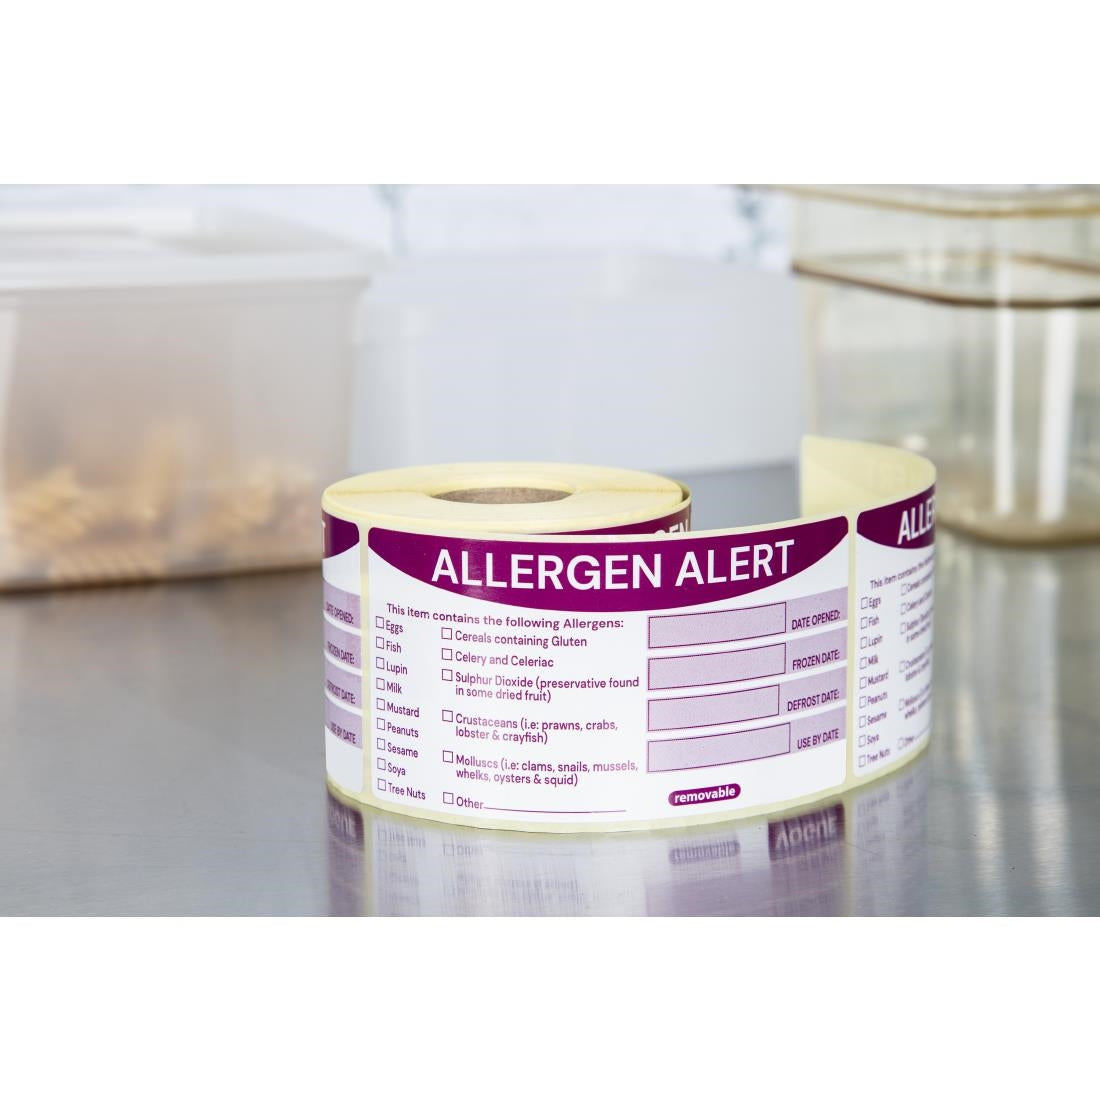 FC217 Vogue Removable Allergen Alert Food Labels (Pack of 250) JD Catering Equipment Solutions Ltd